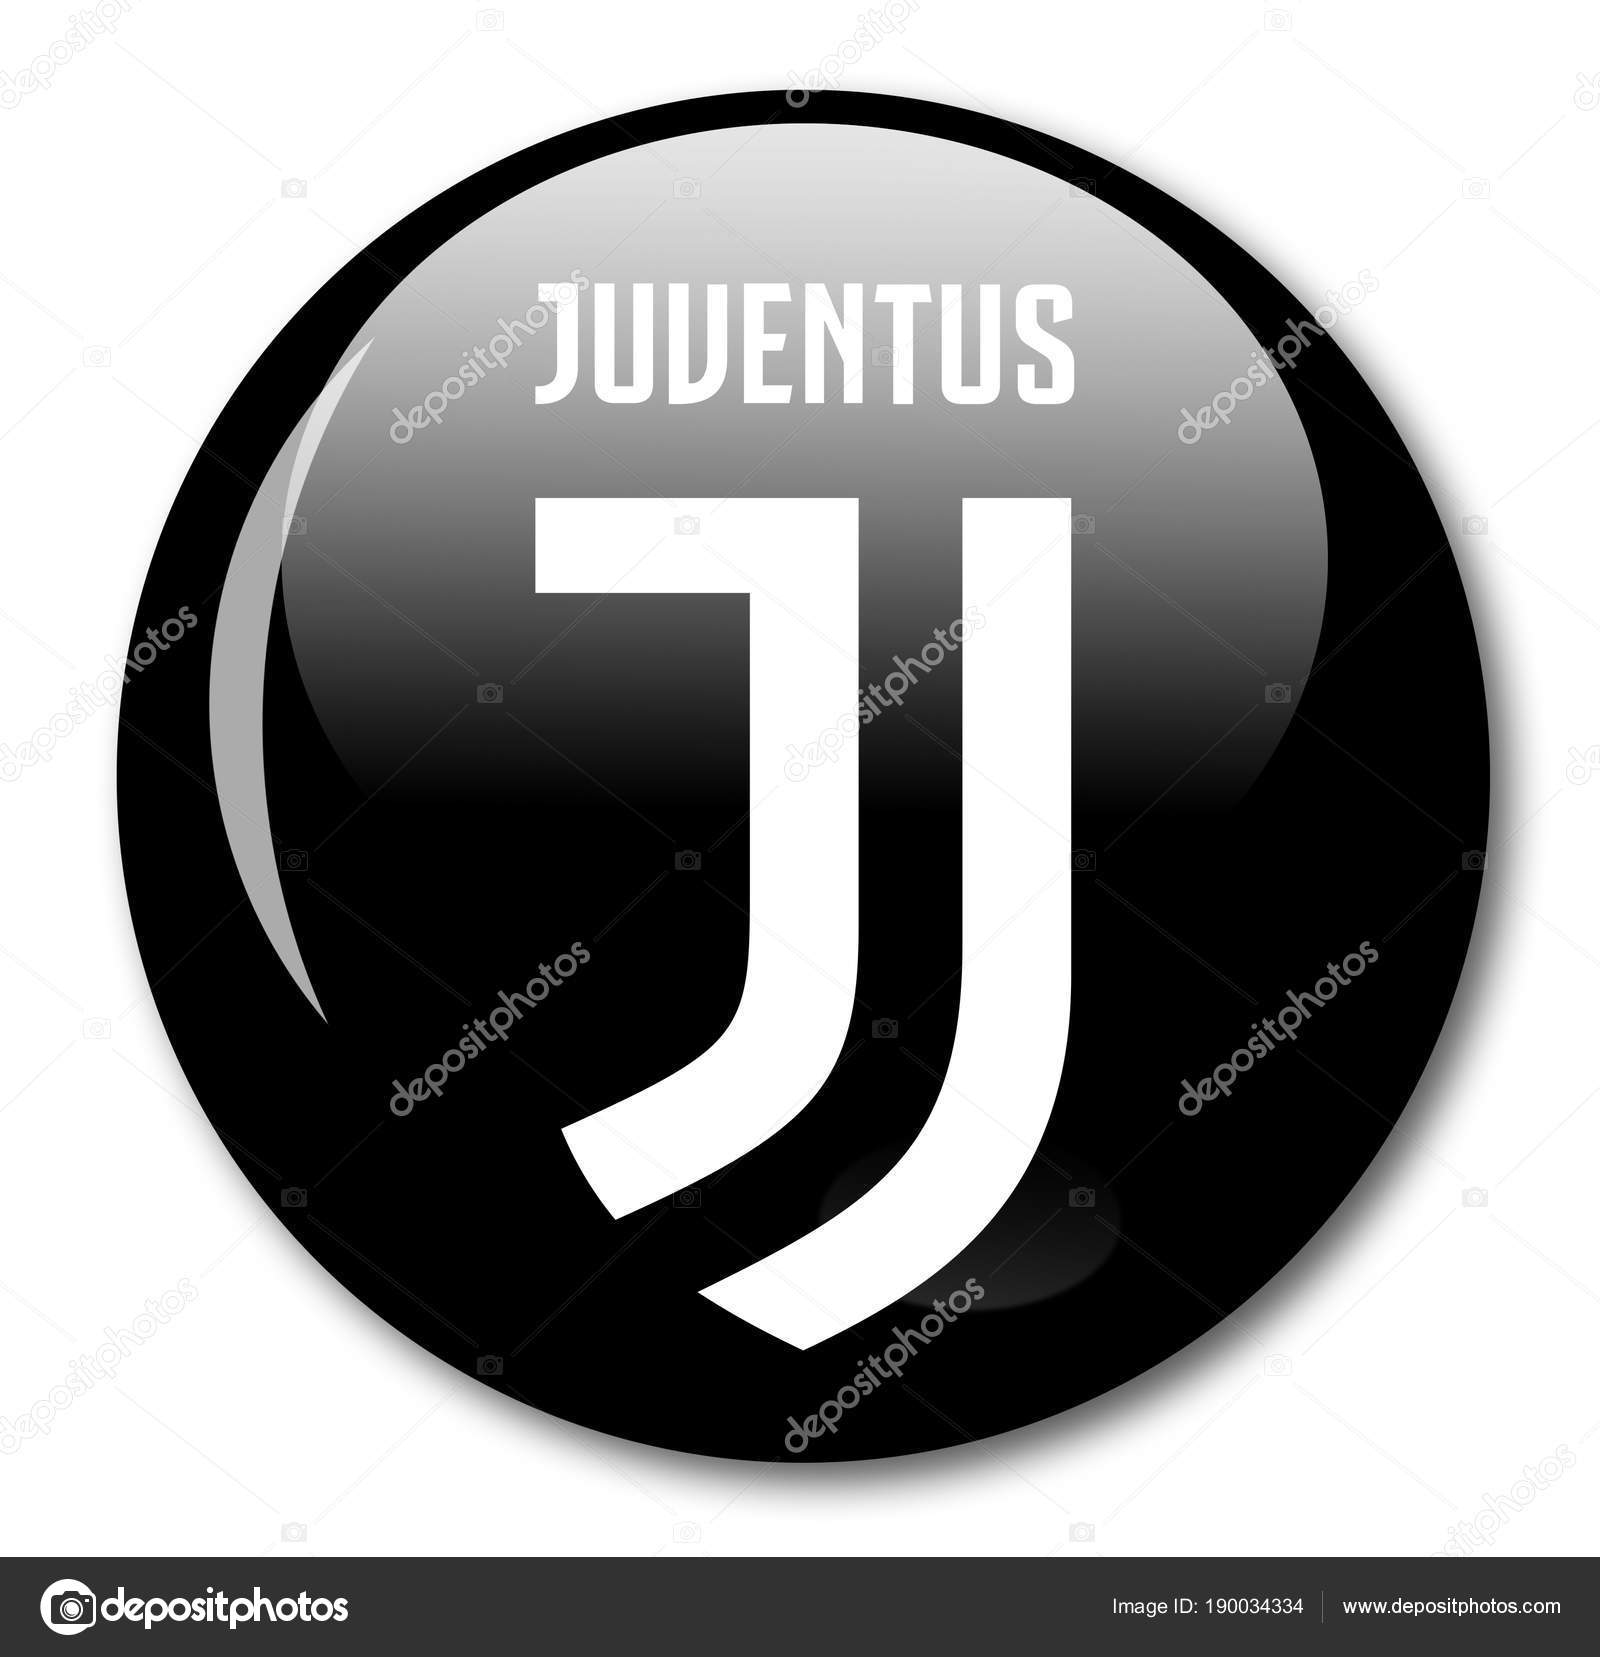 Juventus Fc Sign Stock Editorial Photo Fitimi 190034334